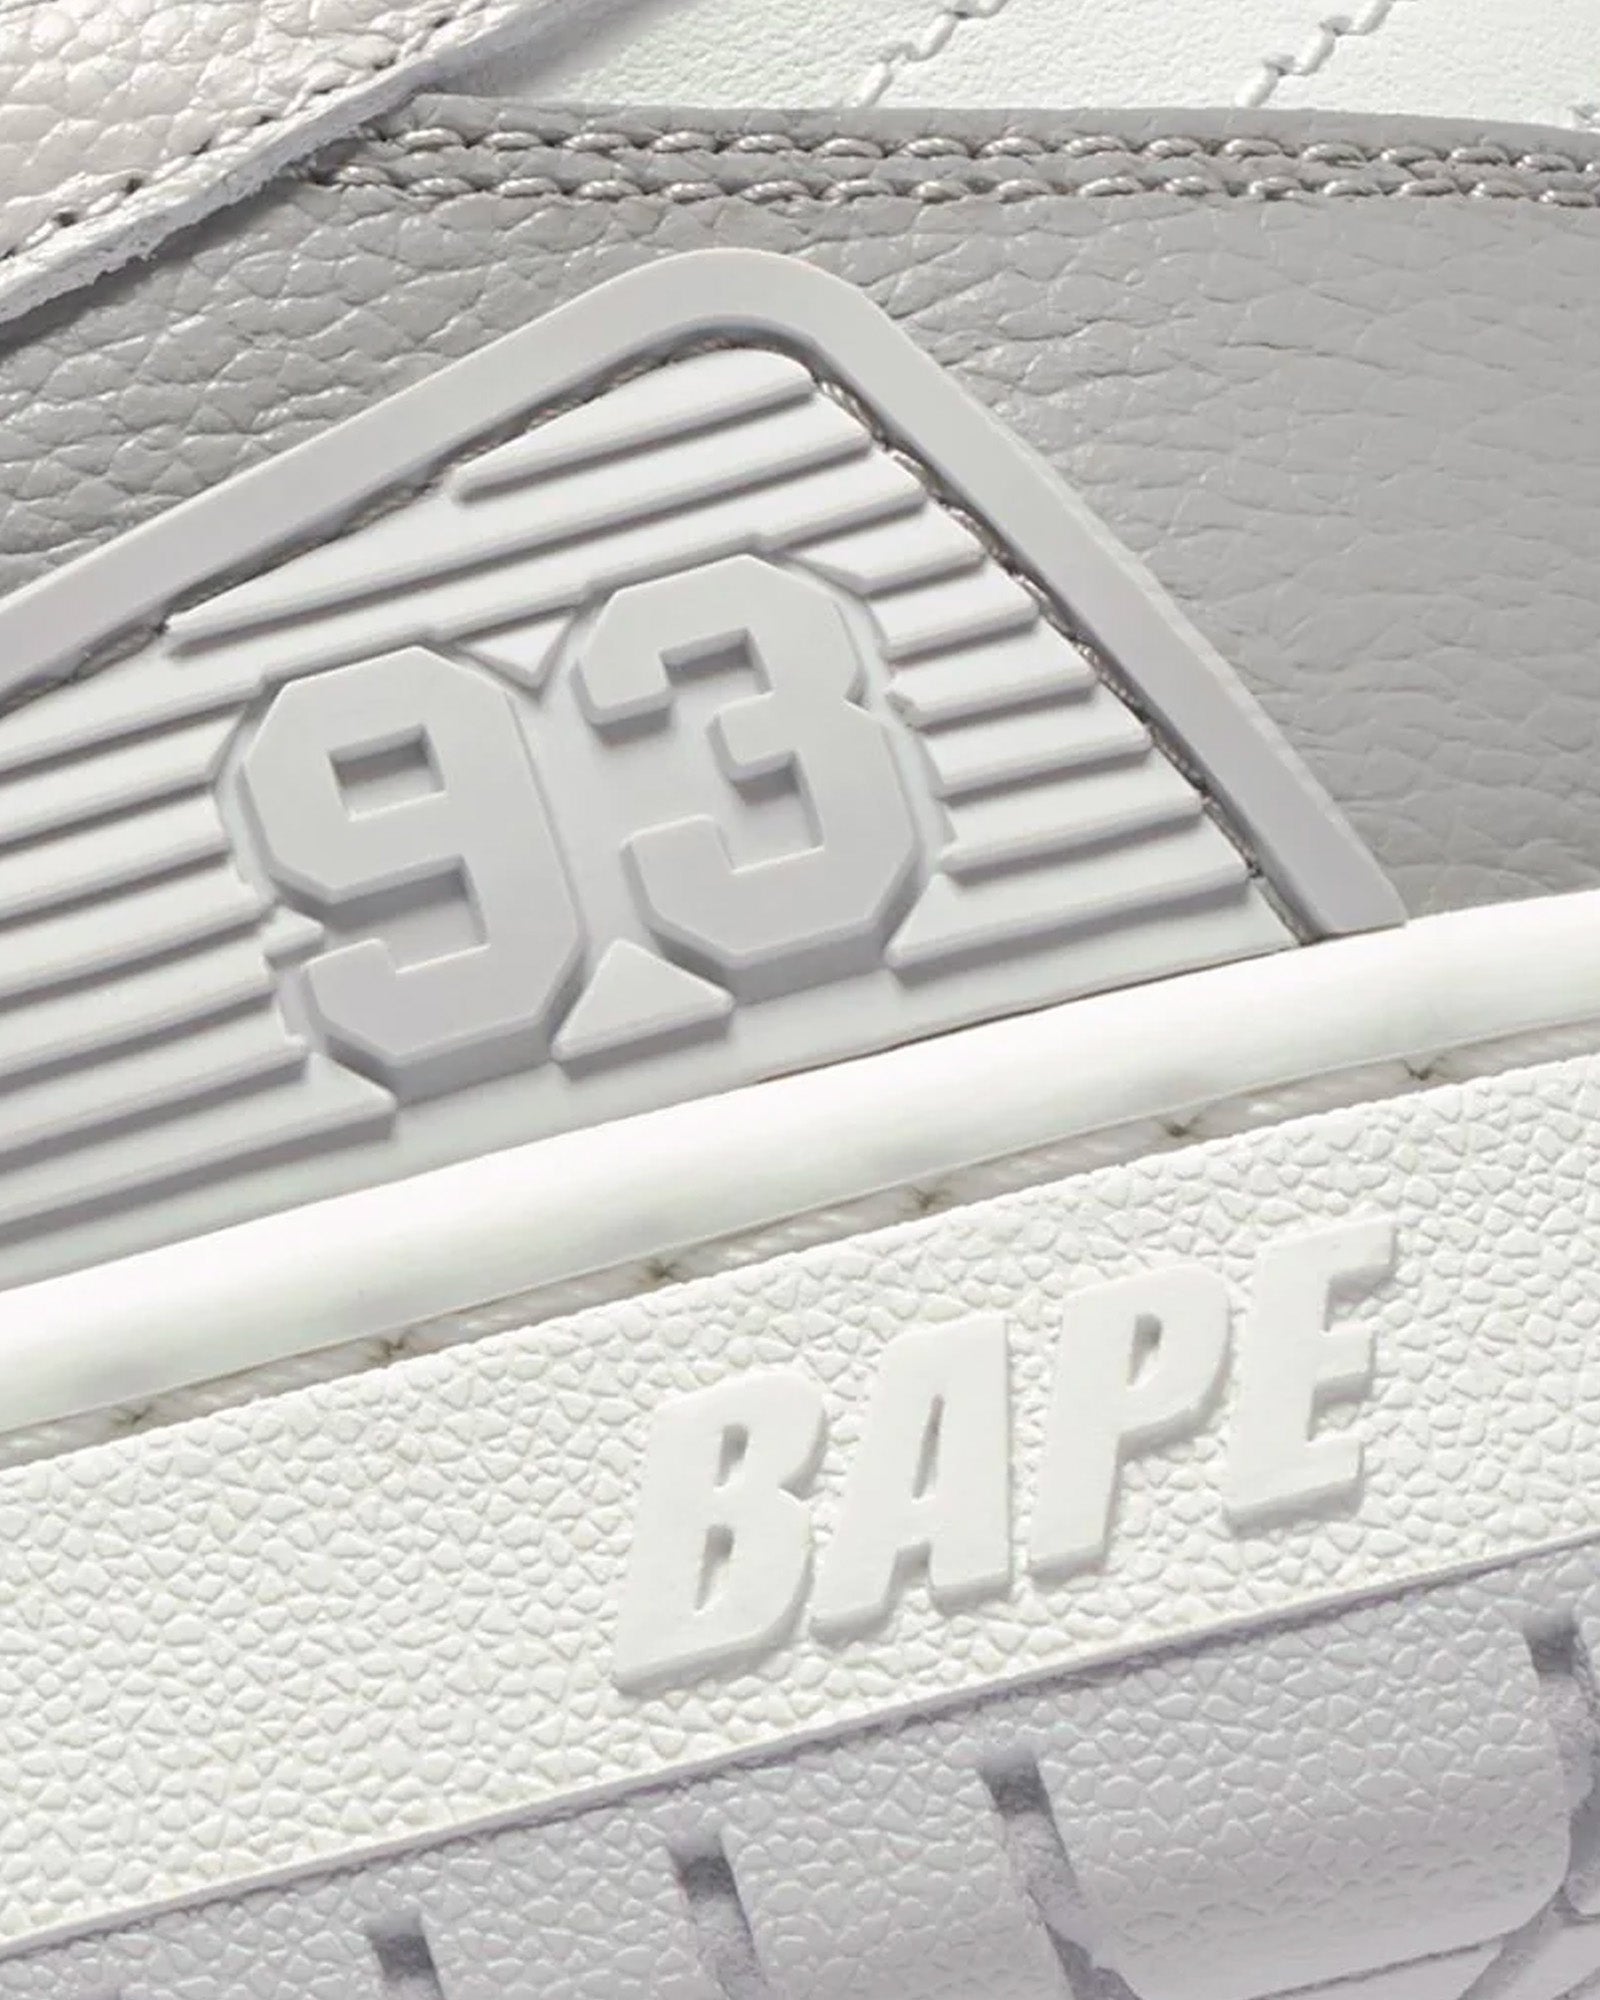 A Bathing APE - Bape Sk8 Sta #5 Grey / White Low Top Sneakers